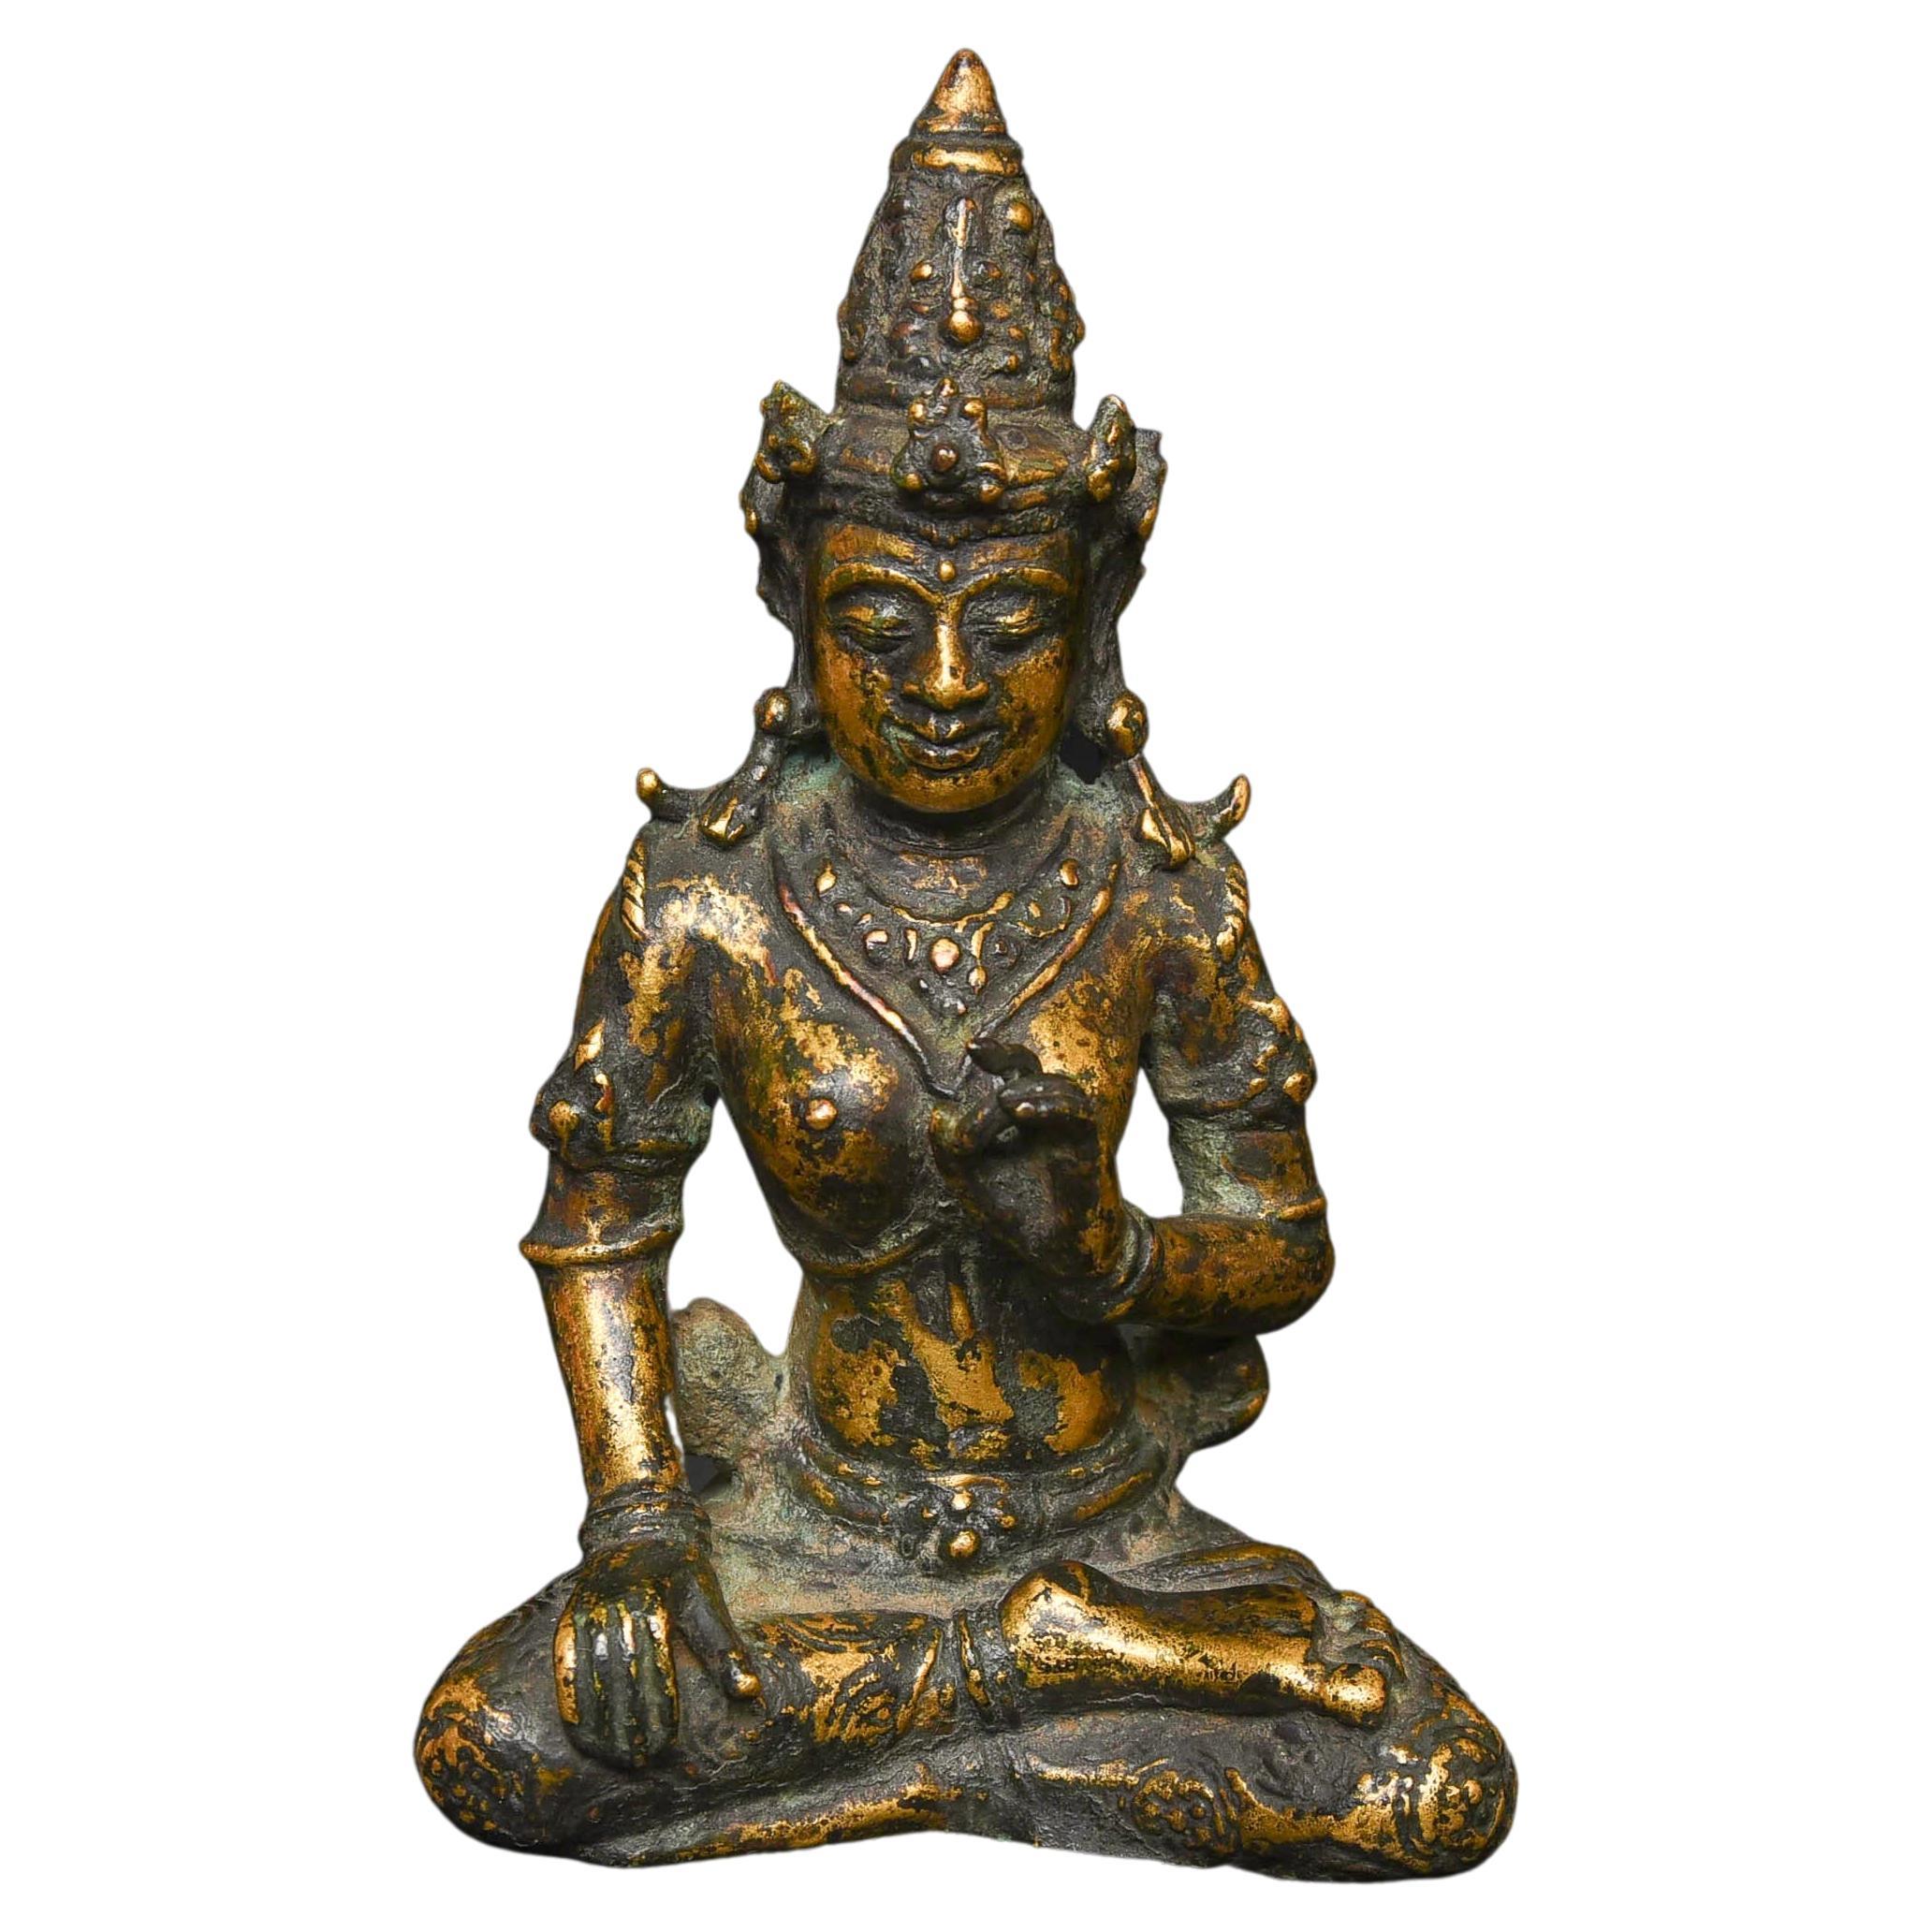 15-19thC Indonesian or Javanese Gilt Bronze Deities - 9591 For Sale